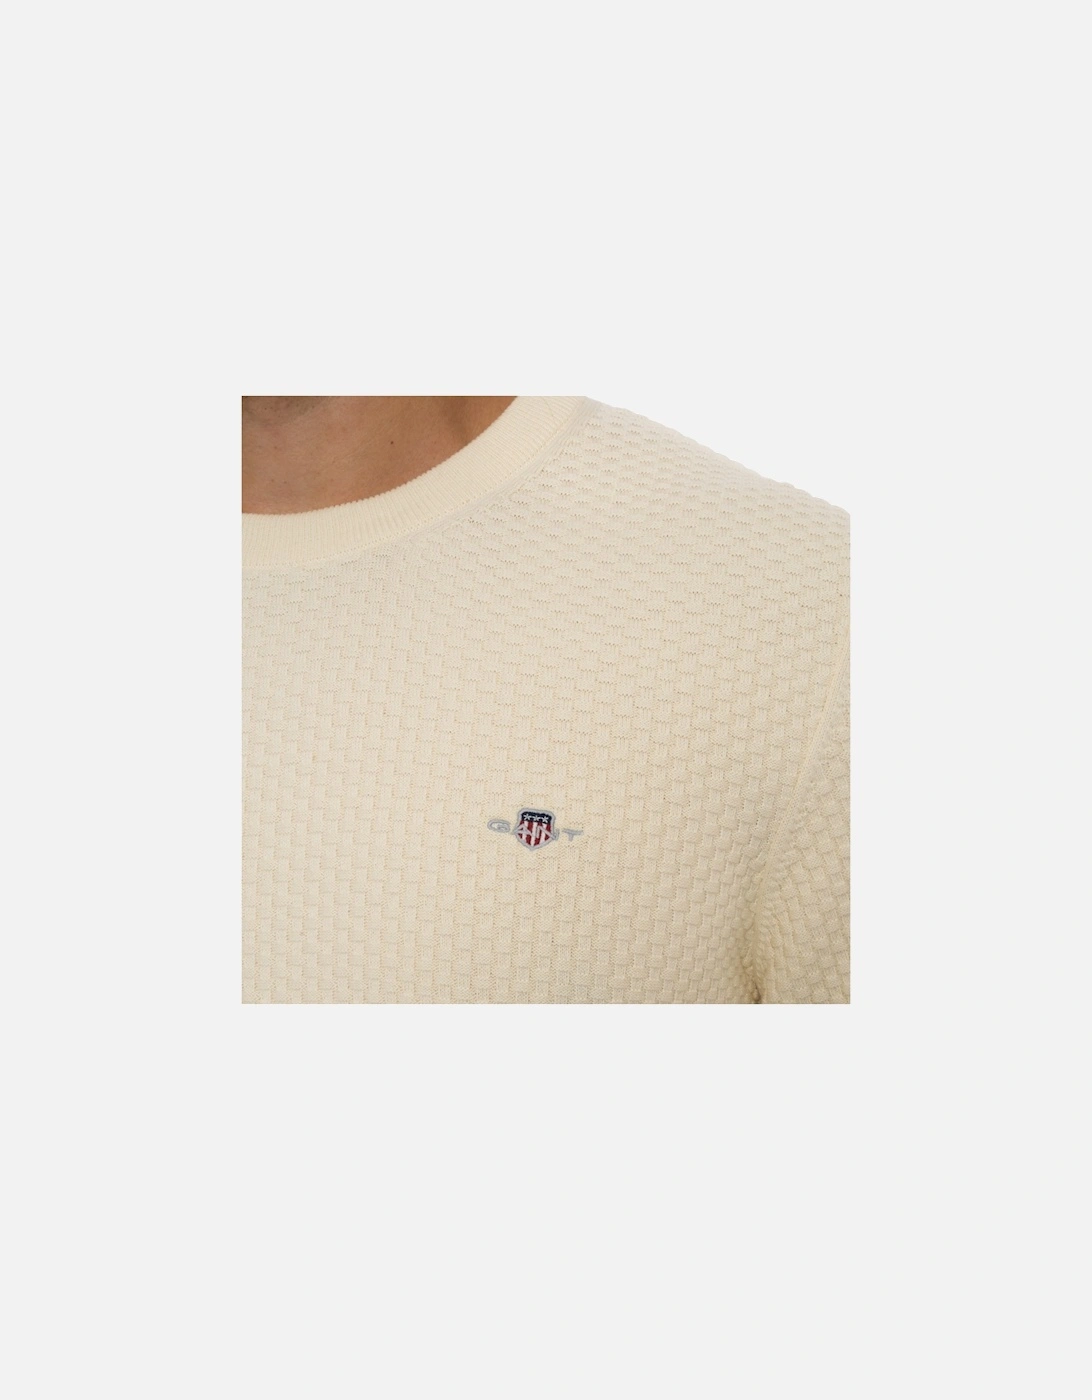 Mens Cotton Texture Crew Knit Sweatshirt (Cream)